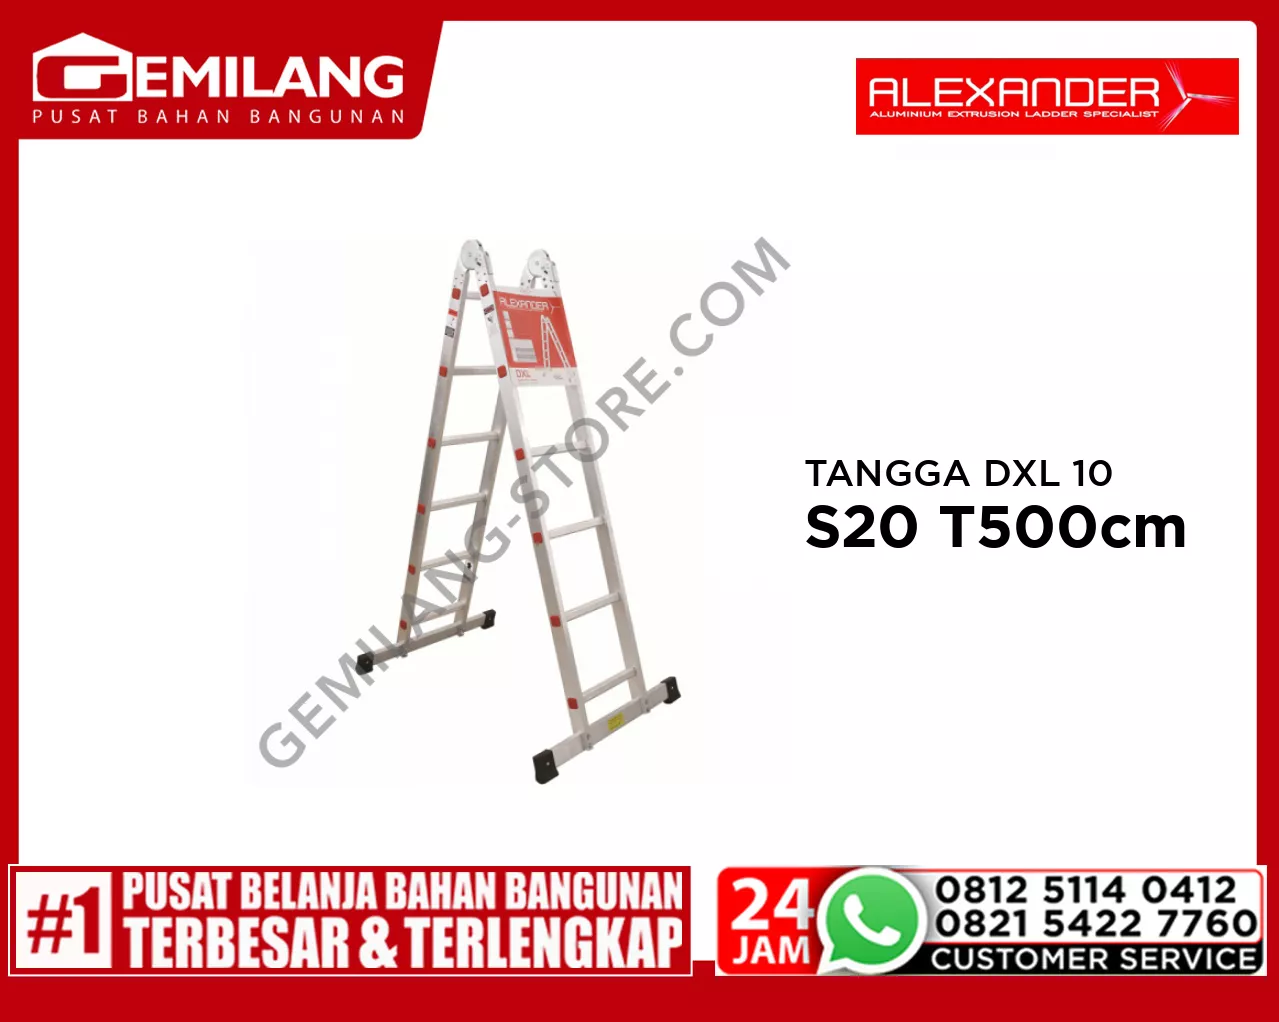 ALEXANDER TANGGA DXL 10 STEPS 20 T500cm